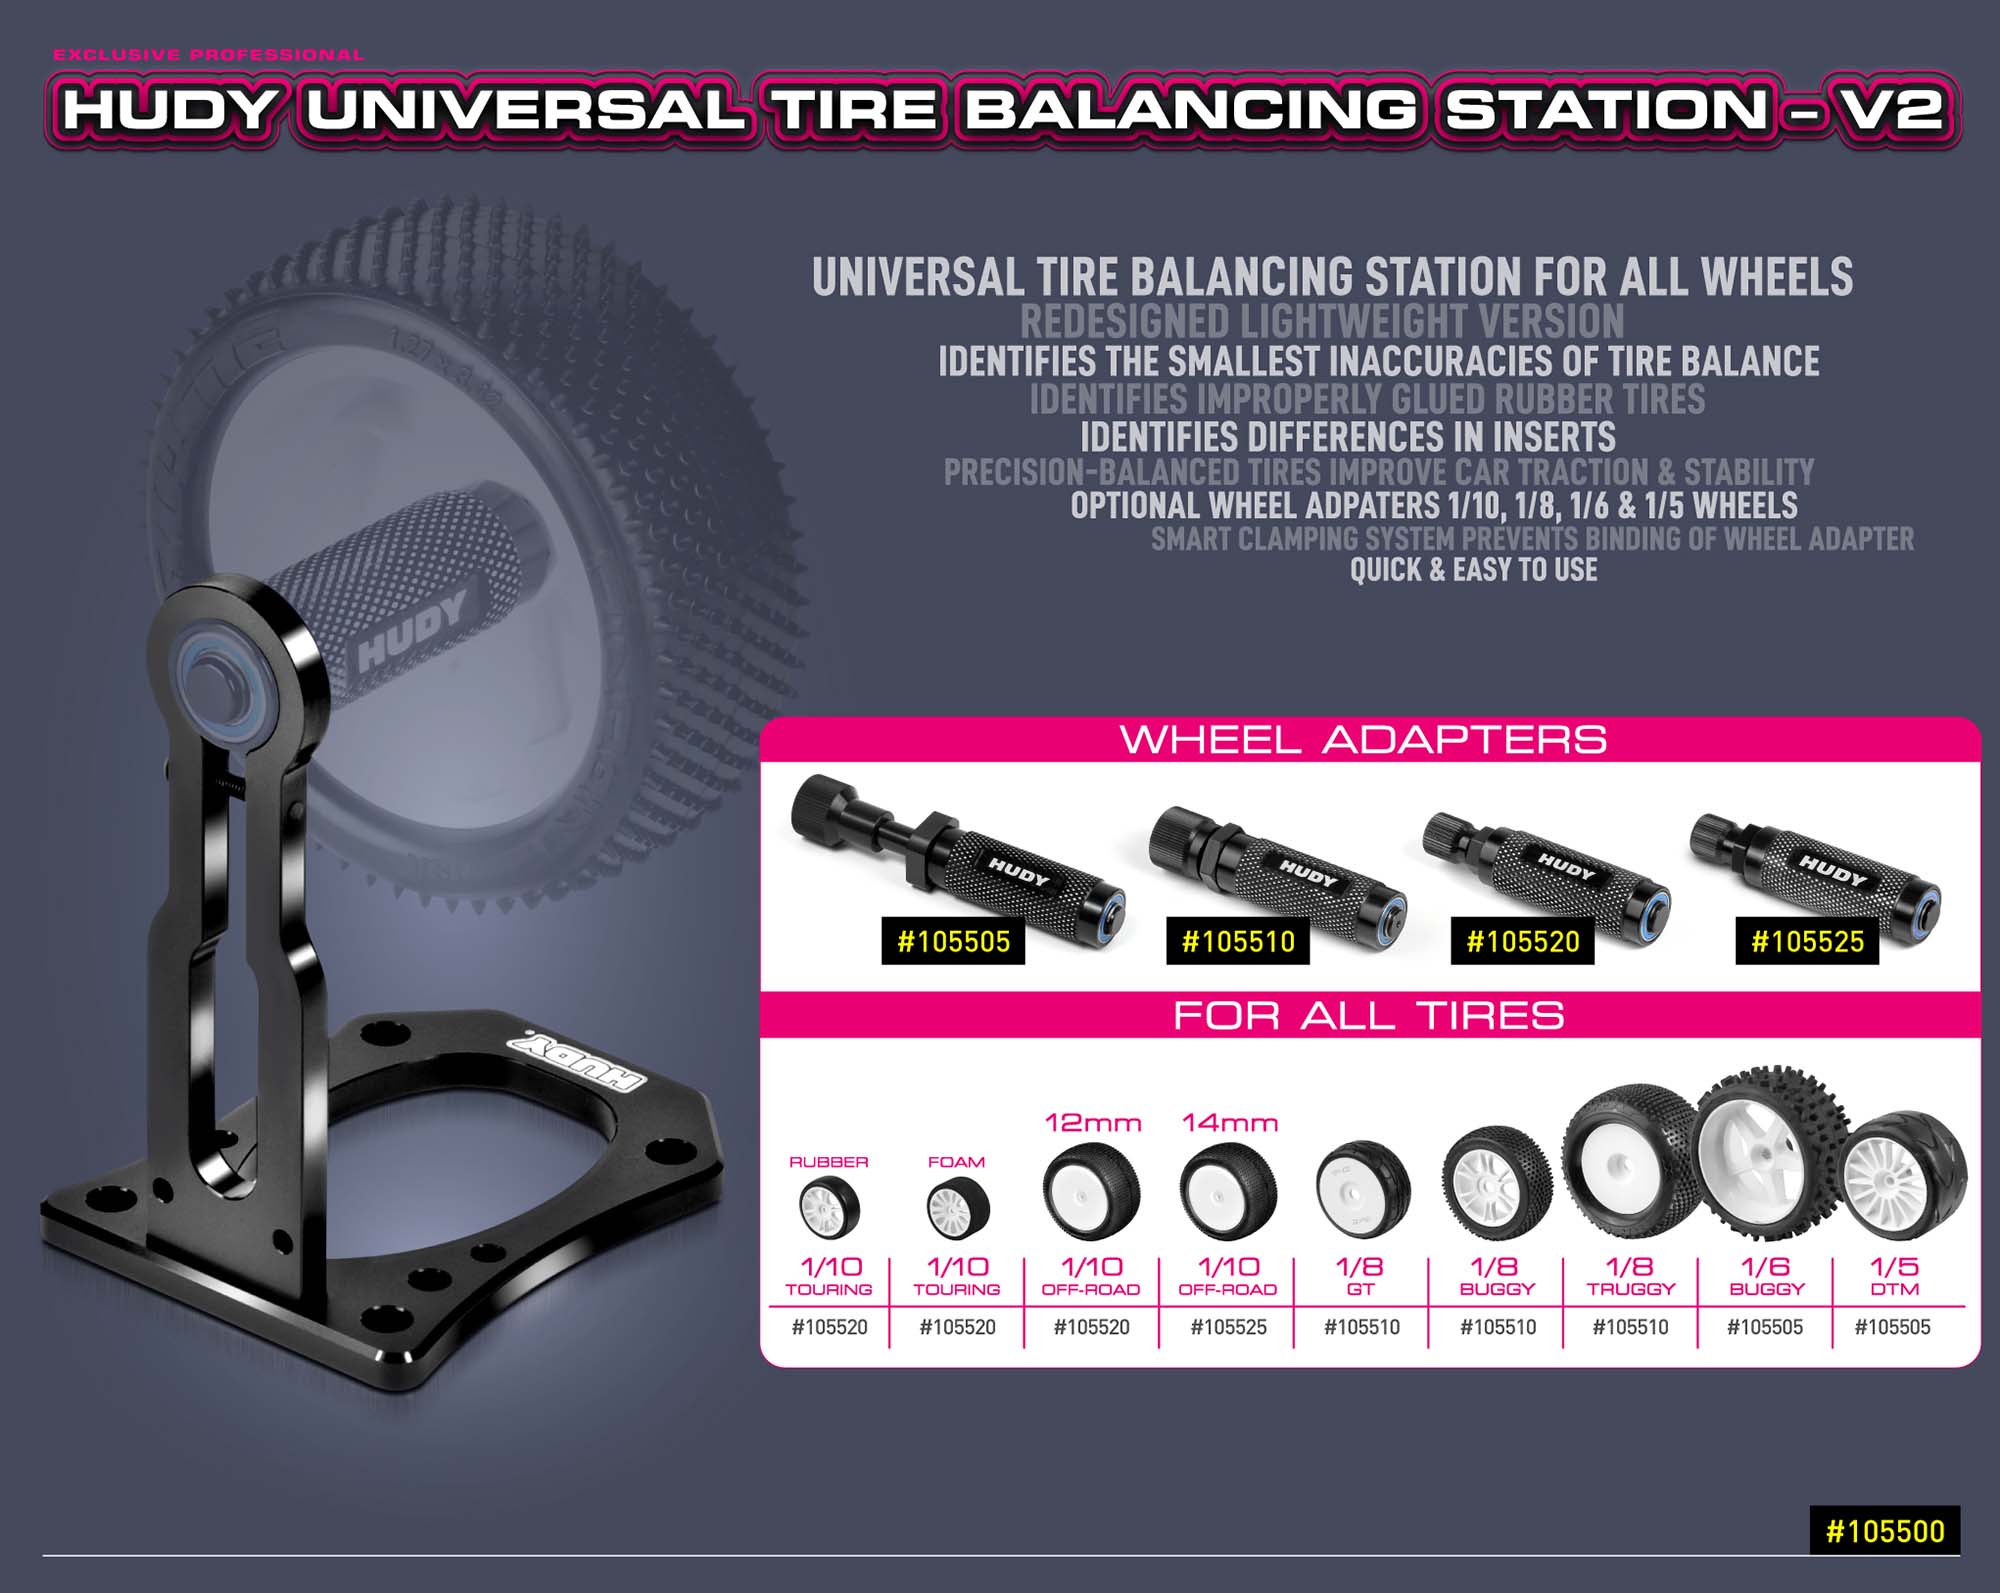 New HUDY Universal Tire Balancing Station - V2